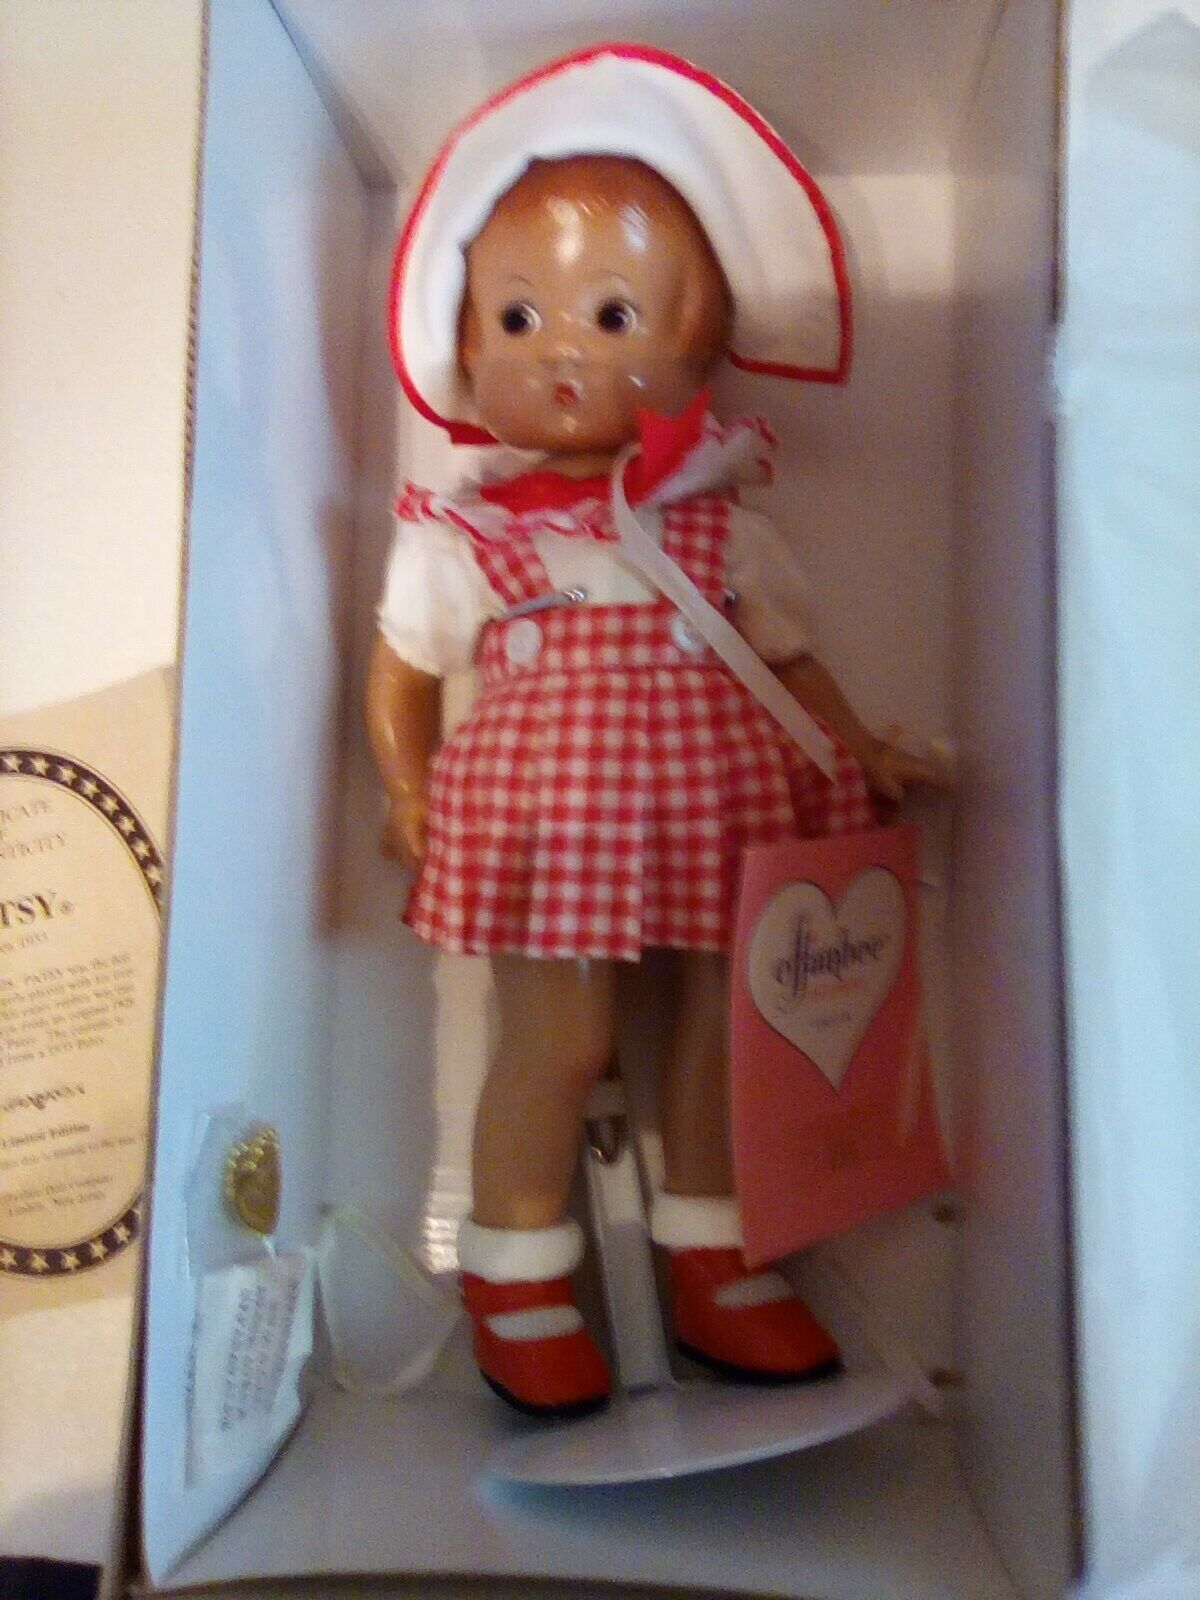 1996 Effanbee Doll Classics Series "patsy" 13" Doll V530 - Needs Restrung